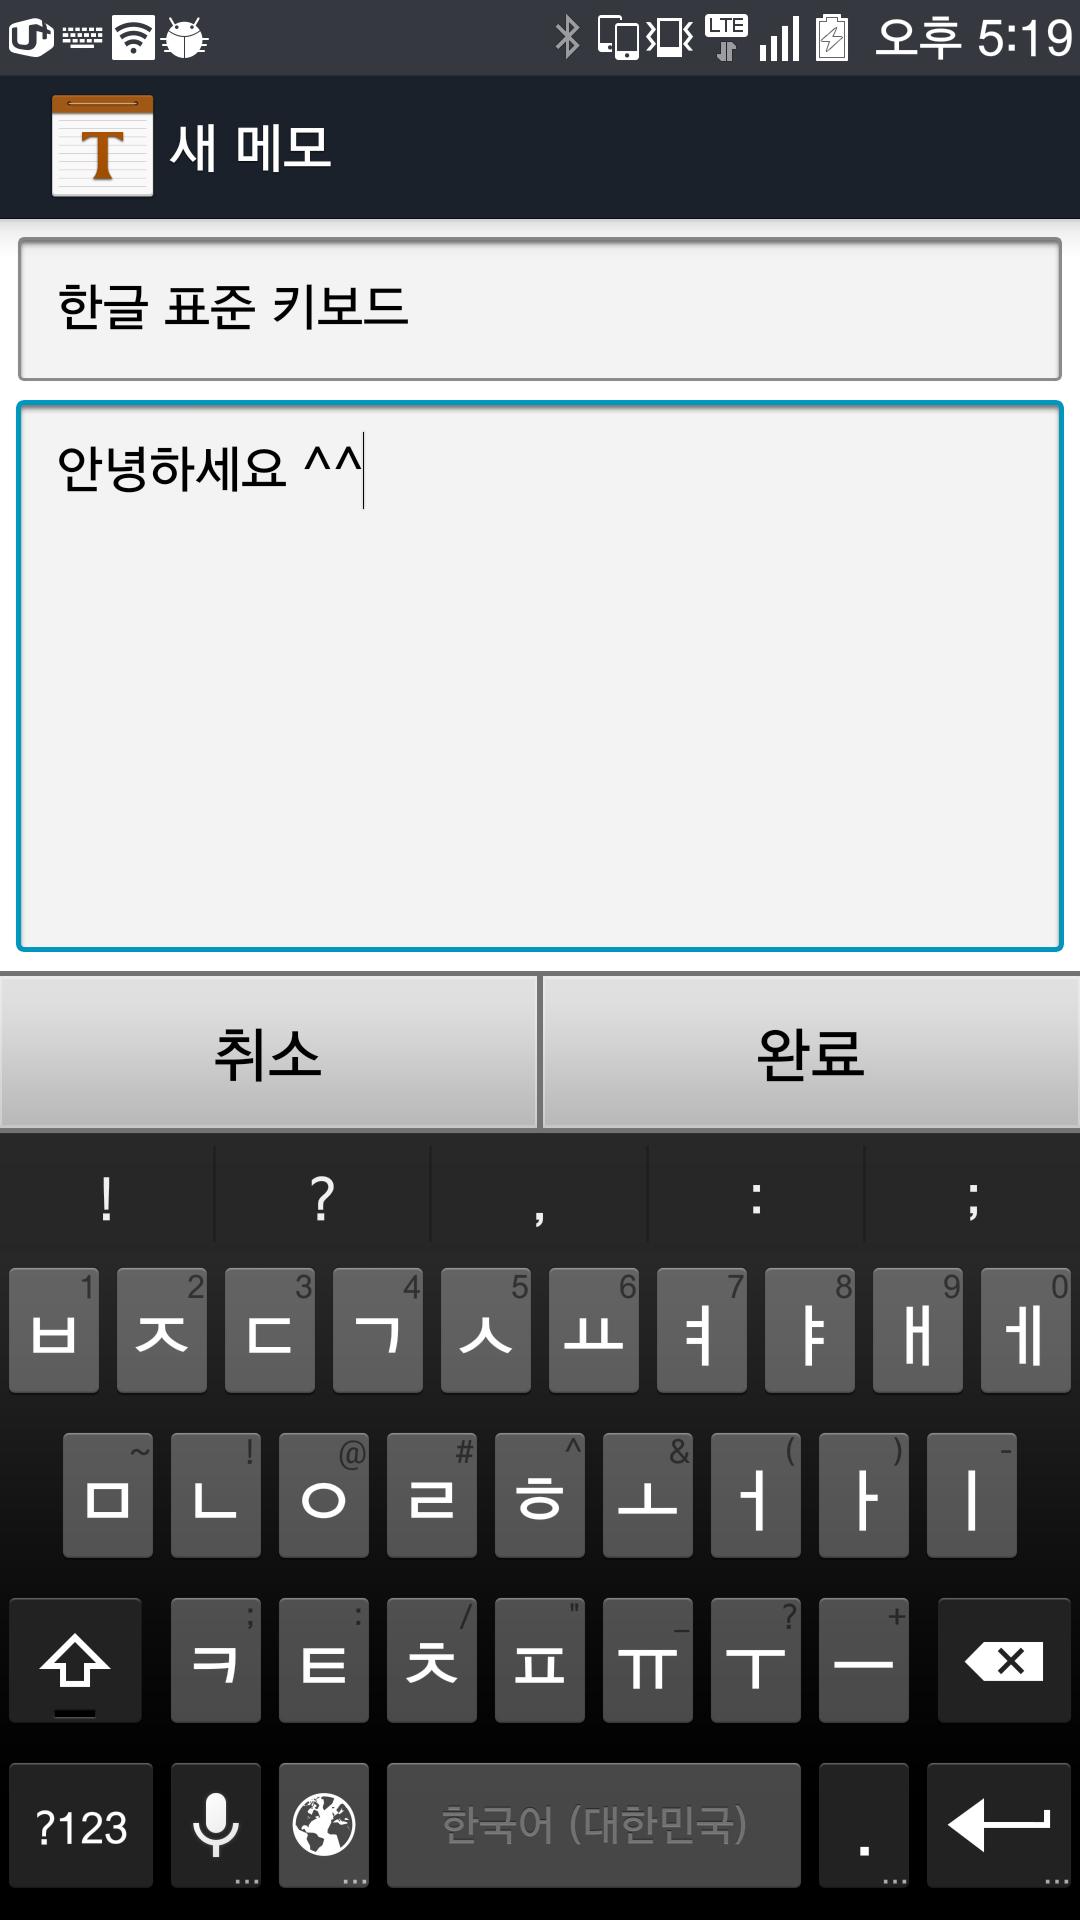 Korean Standard Keyboard for Android - APK Download